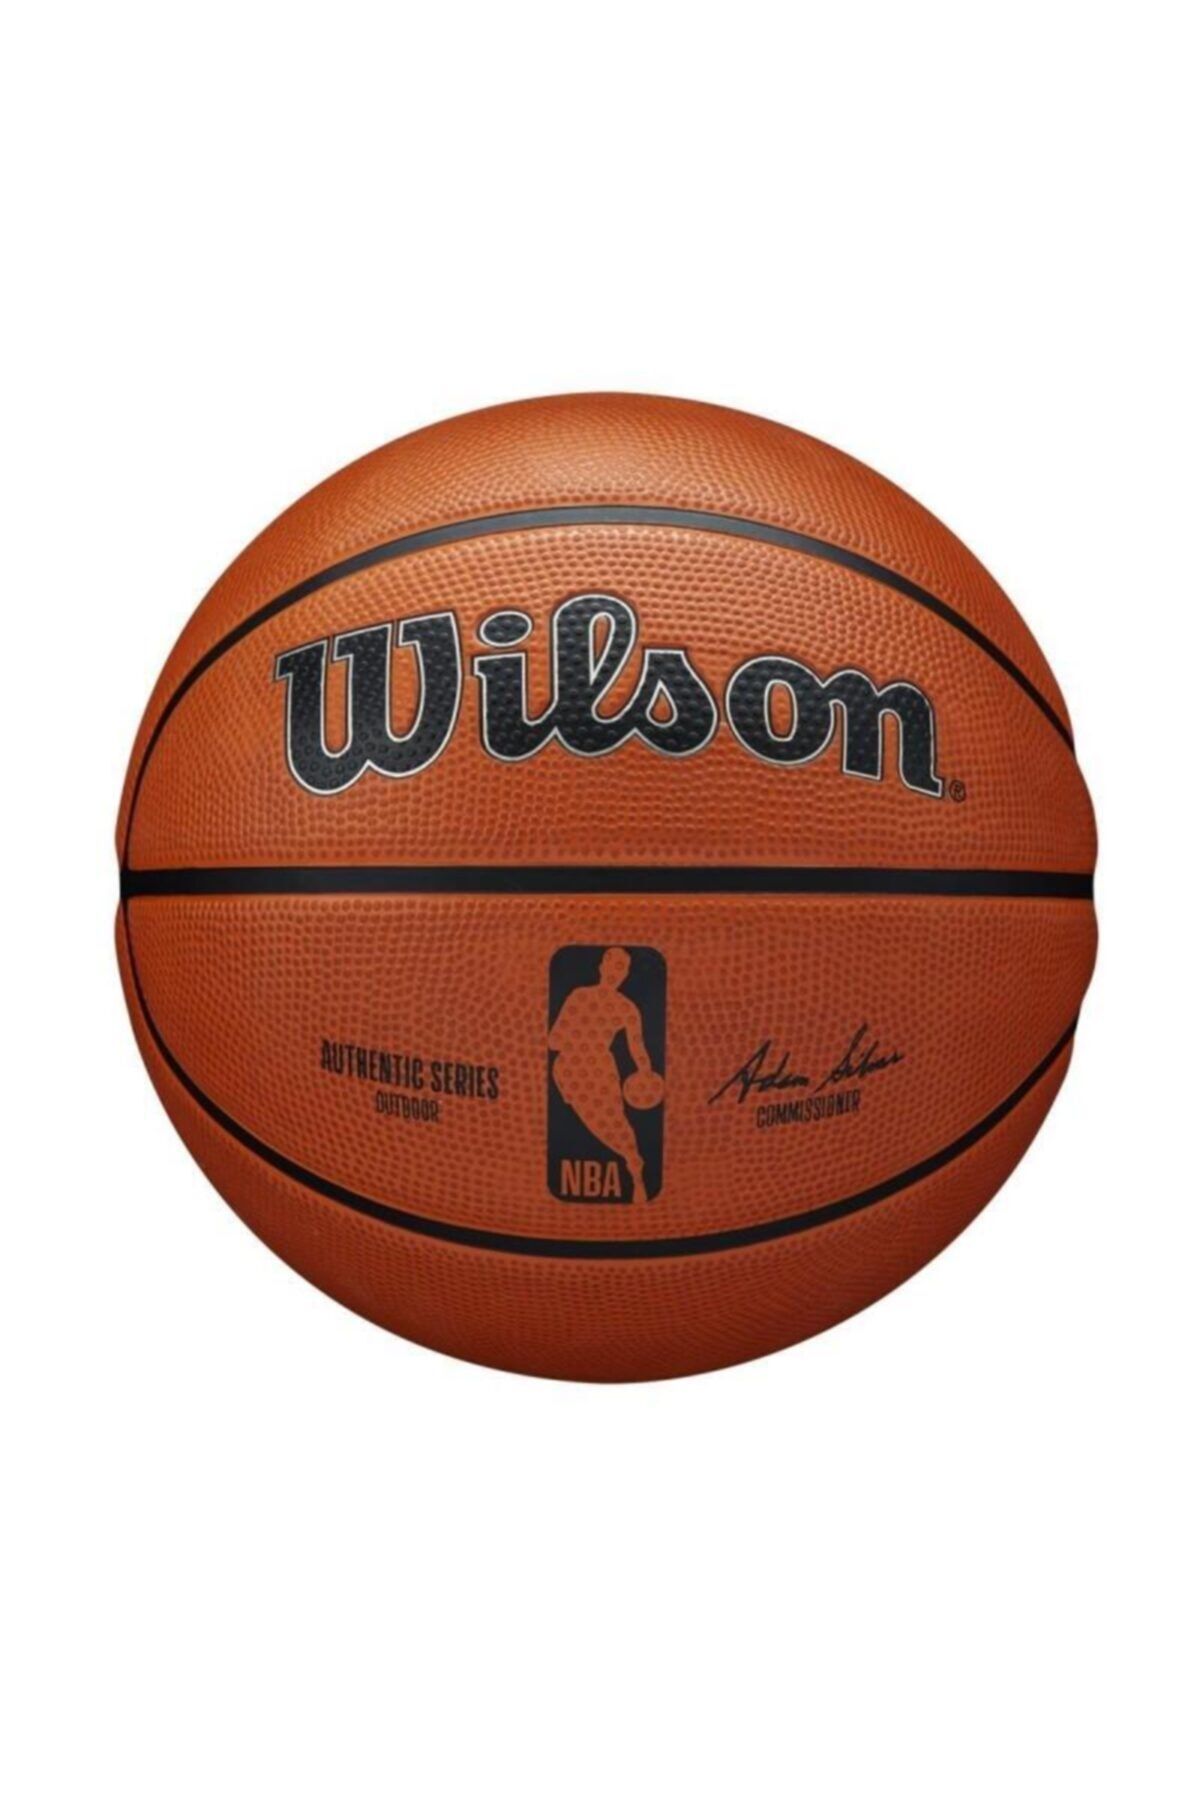 Wilson Nba Authentic Series Basketbol Topu Outdoor Size 7 (wtb7300xb07)